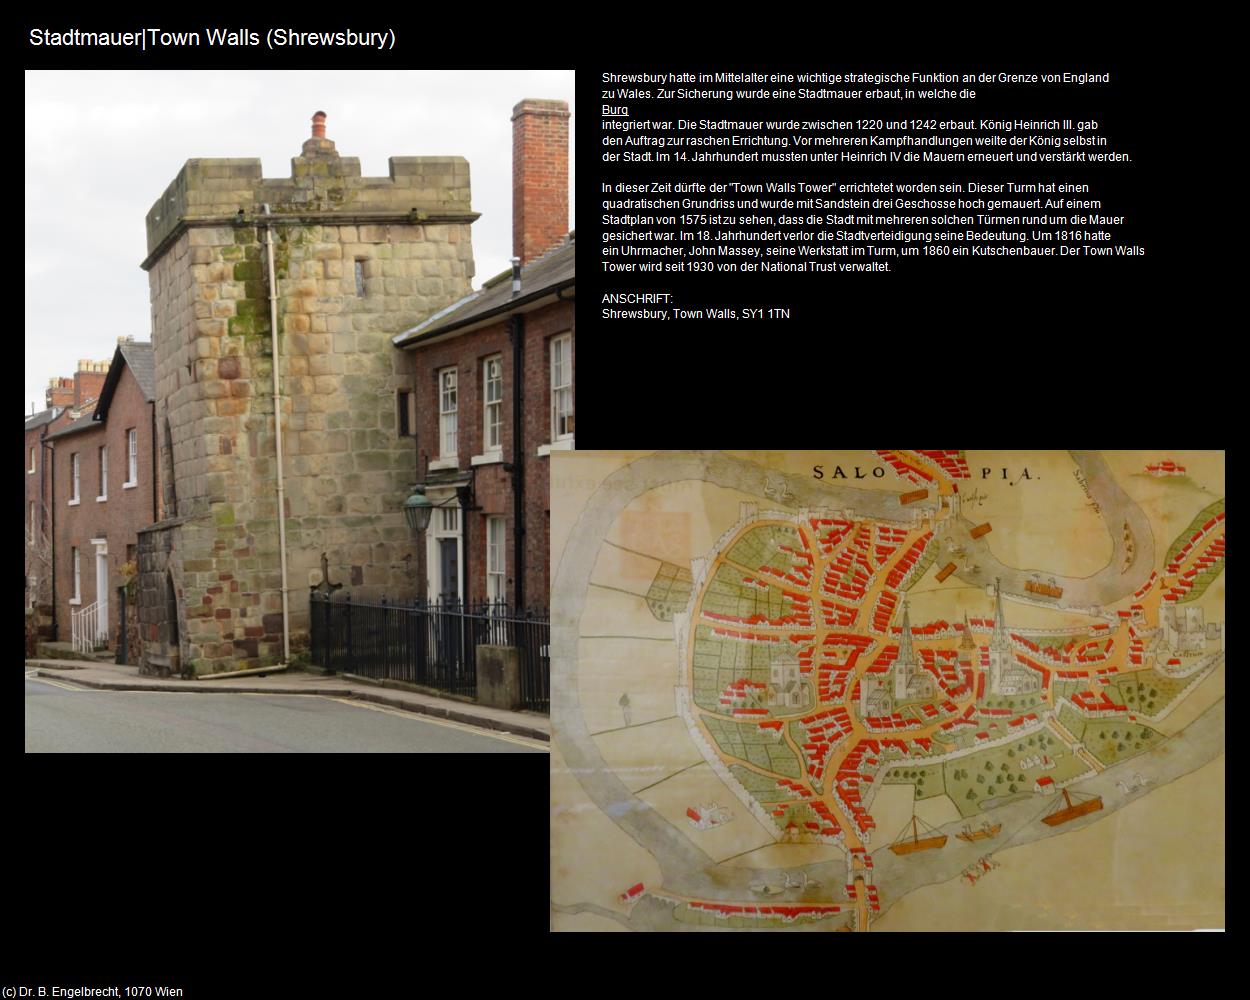 Stadtmauer|Town Walls  (Shrewsbury, England) in Kulturatlas-ENGLAND und WALES(c)B.Engelbrecht